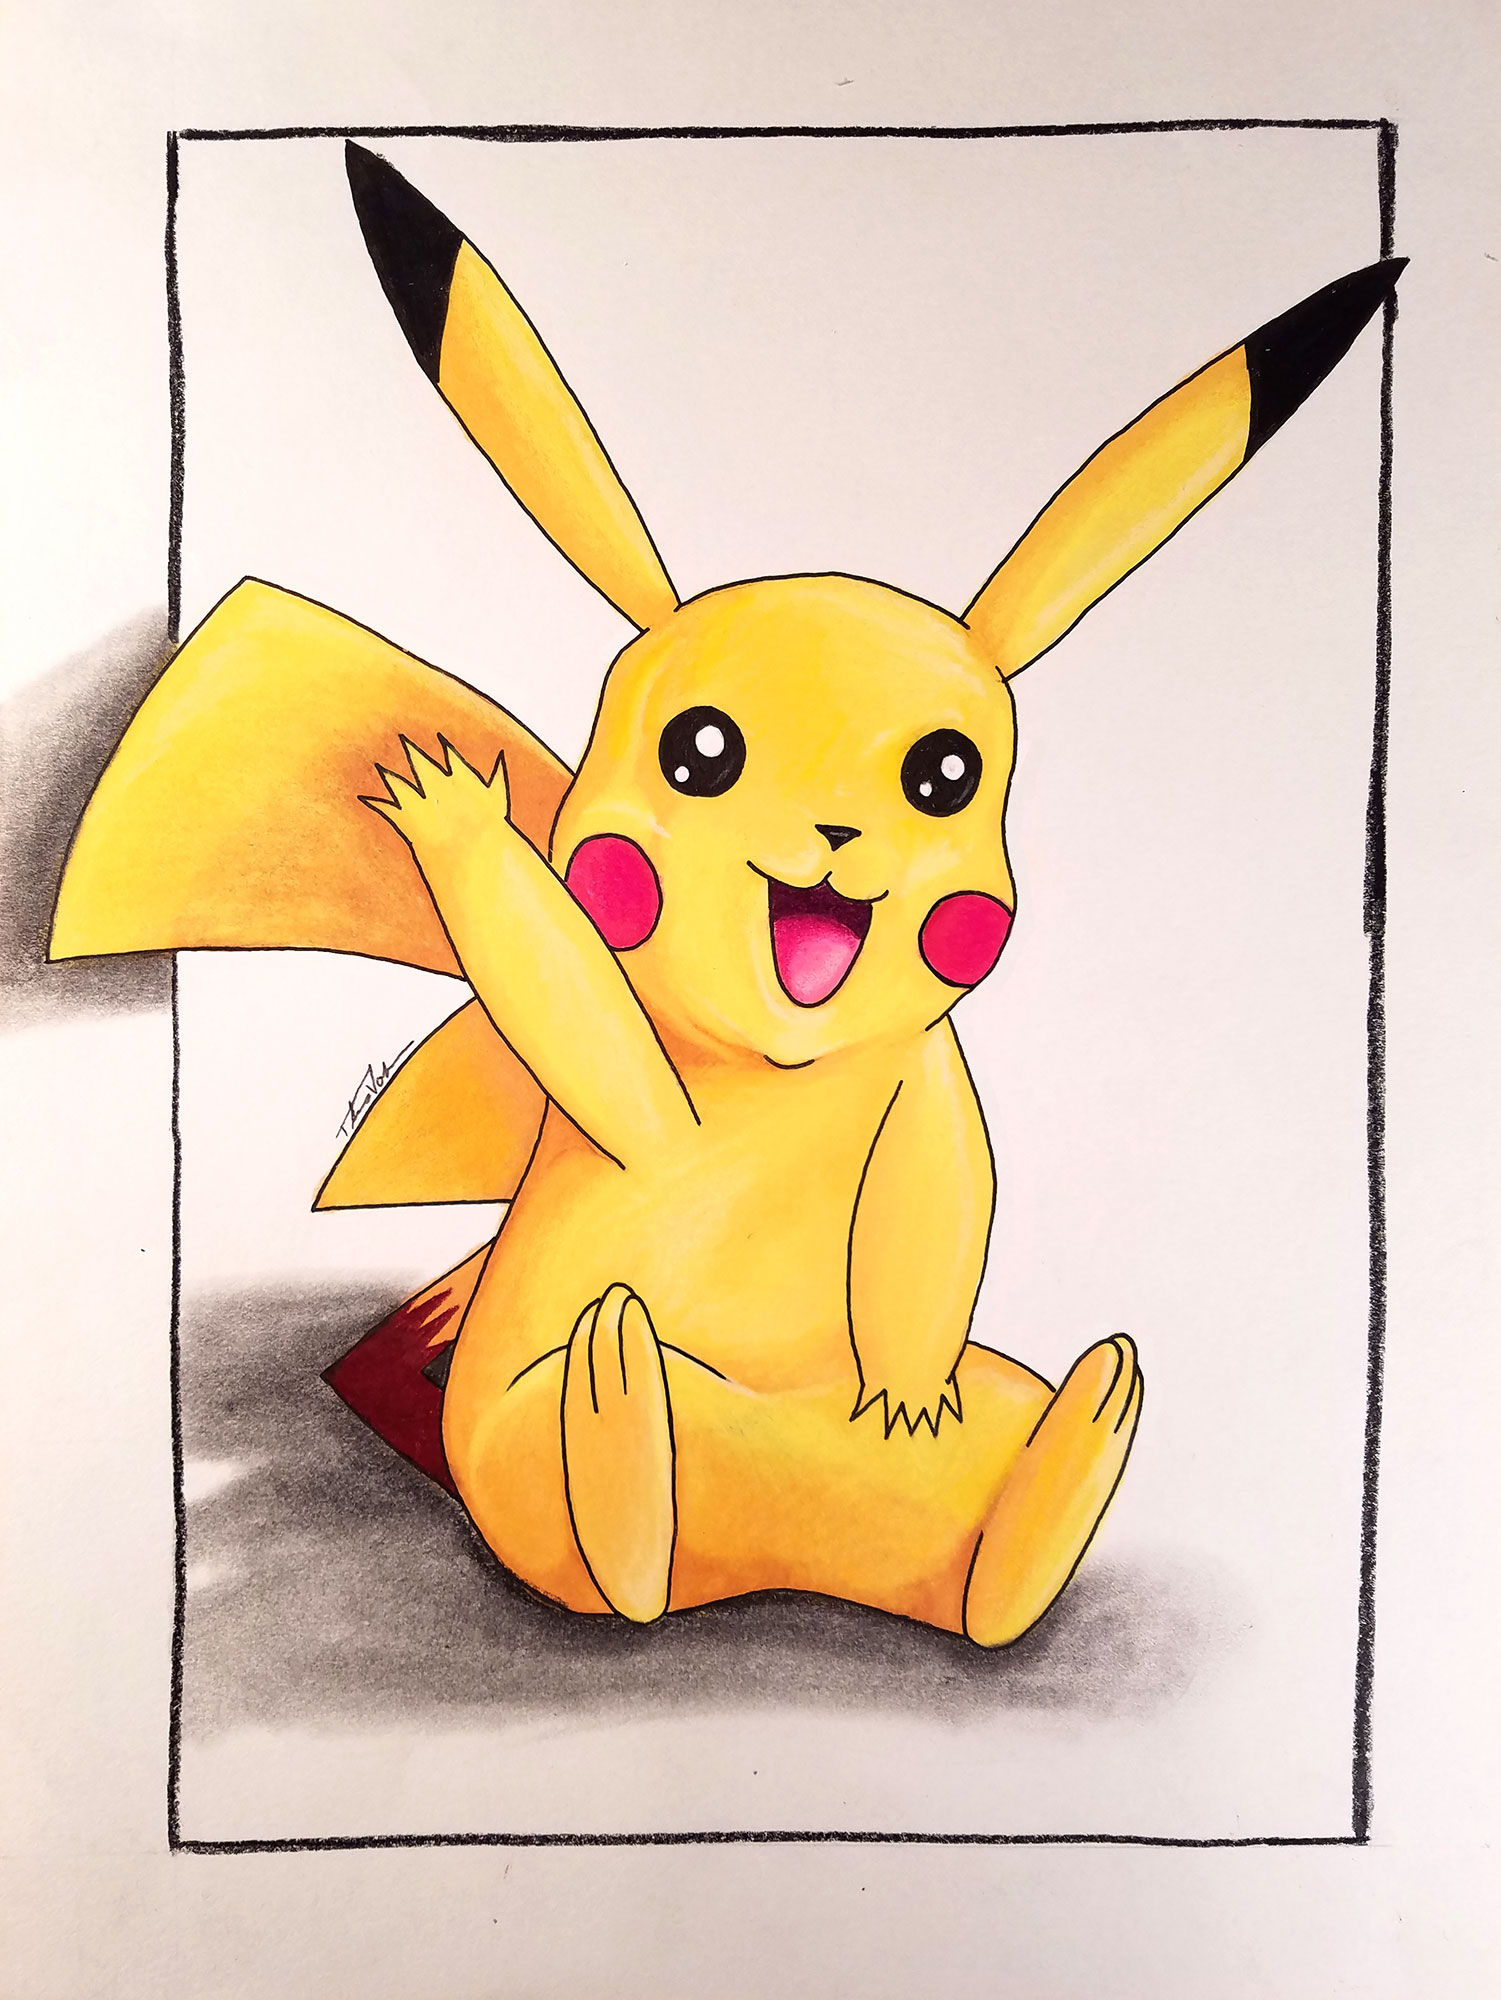 Marker illustration of Pikachu